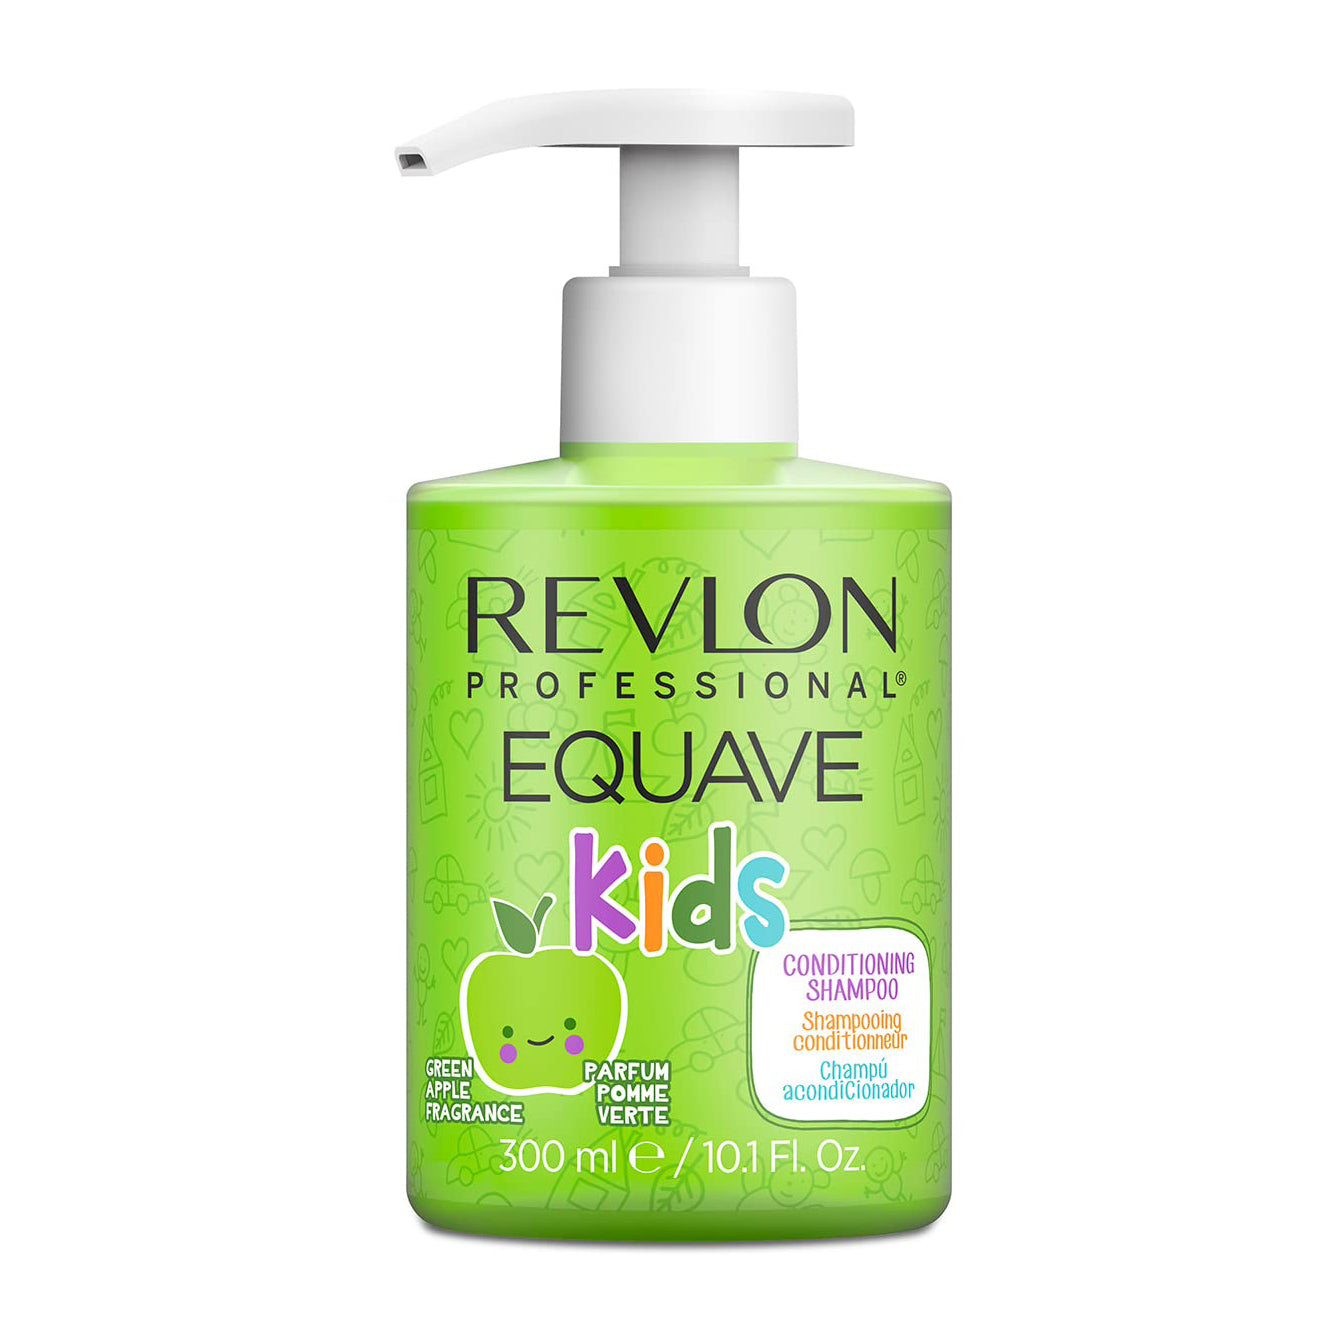 Revlon Professional Equave Kids Green Apple Fragrance Conditioning Shampoo - 300ml